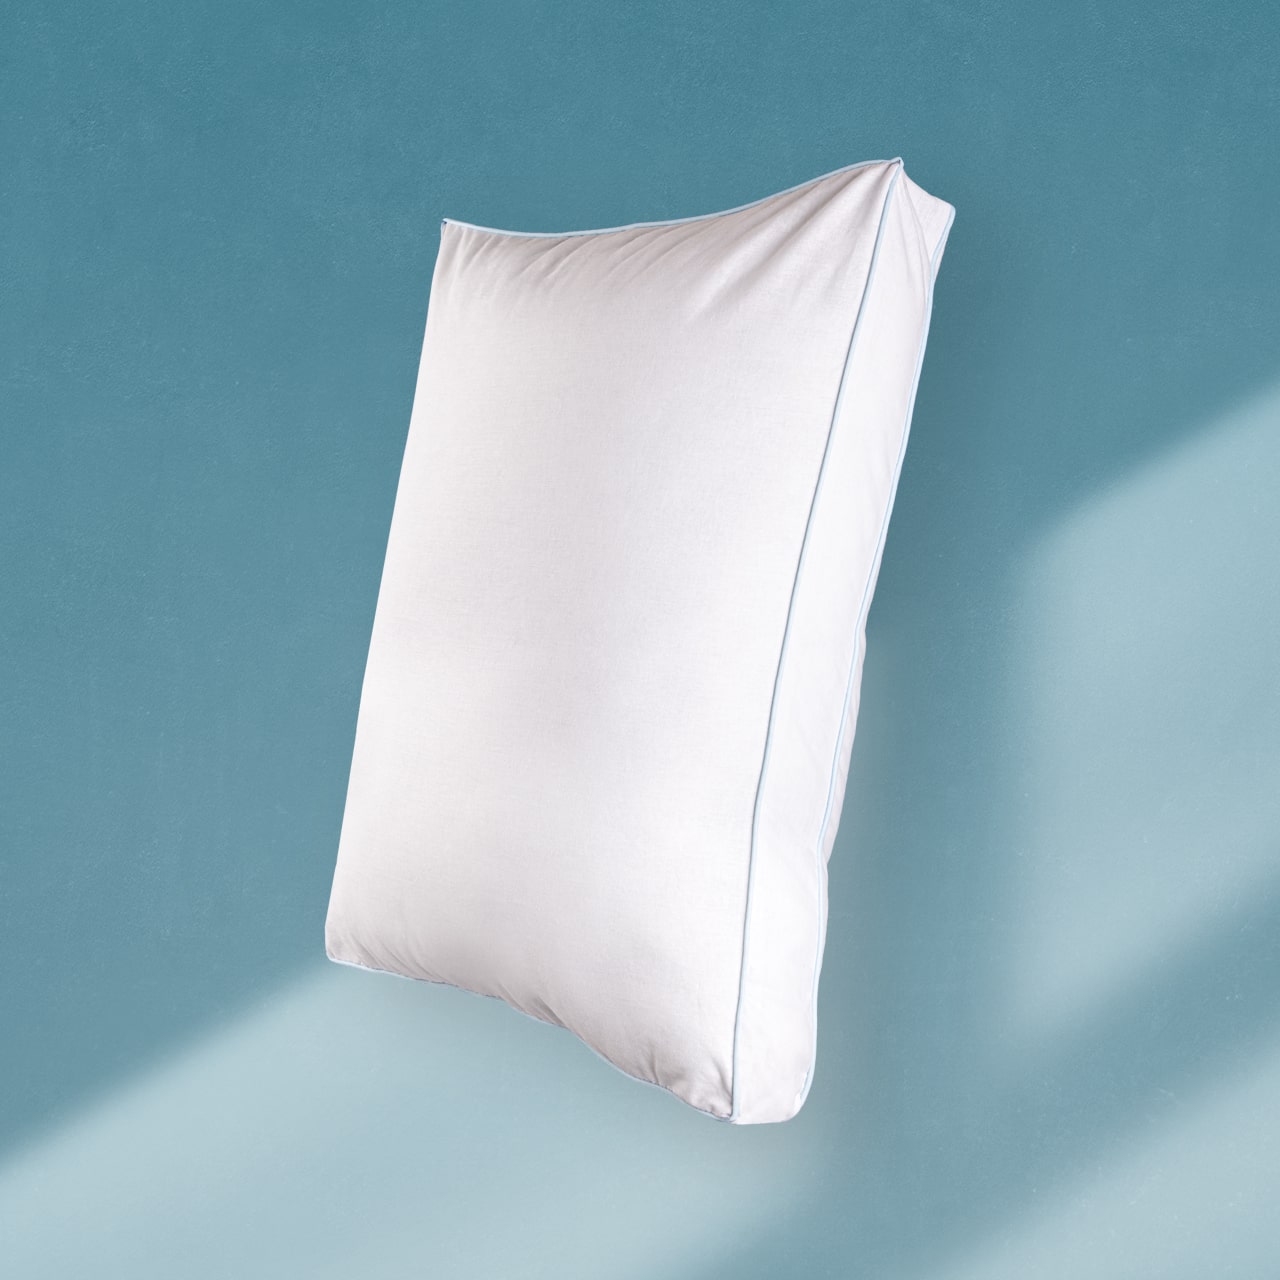 Balsa pro medical pillow